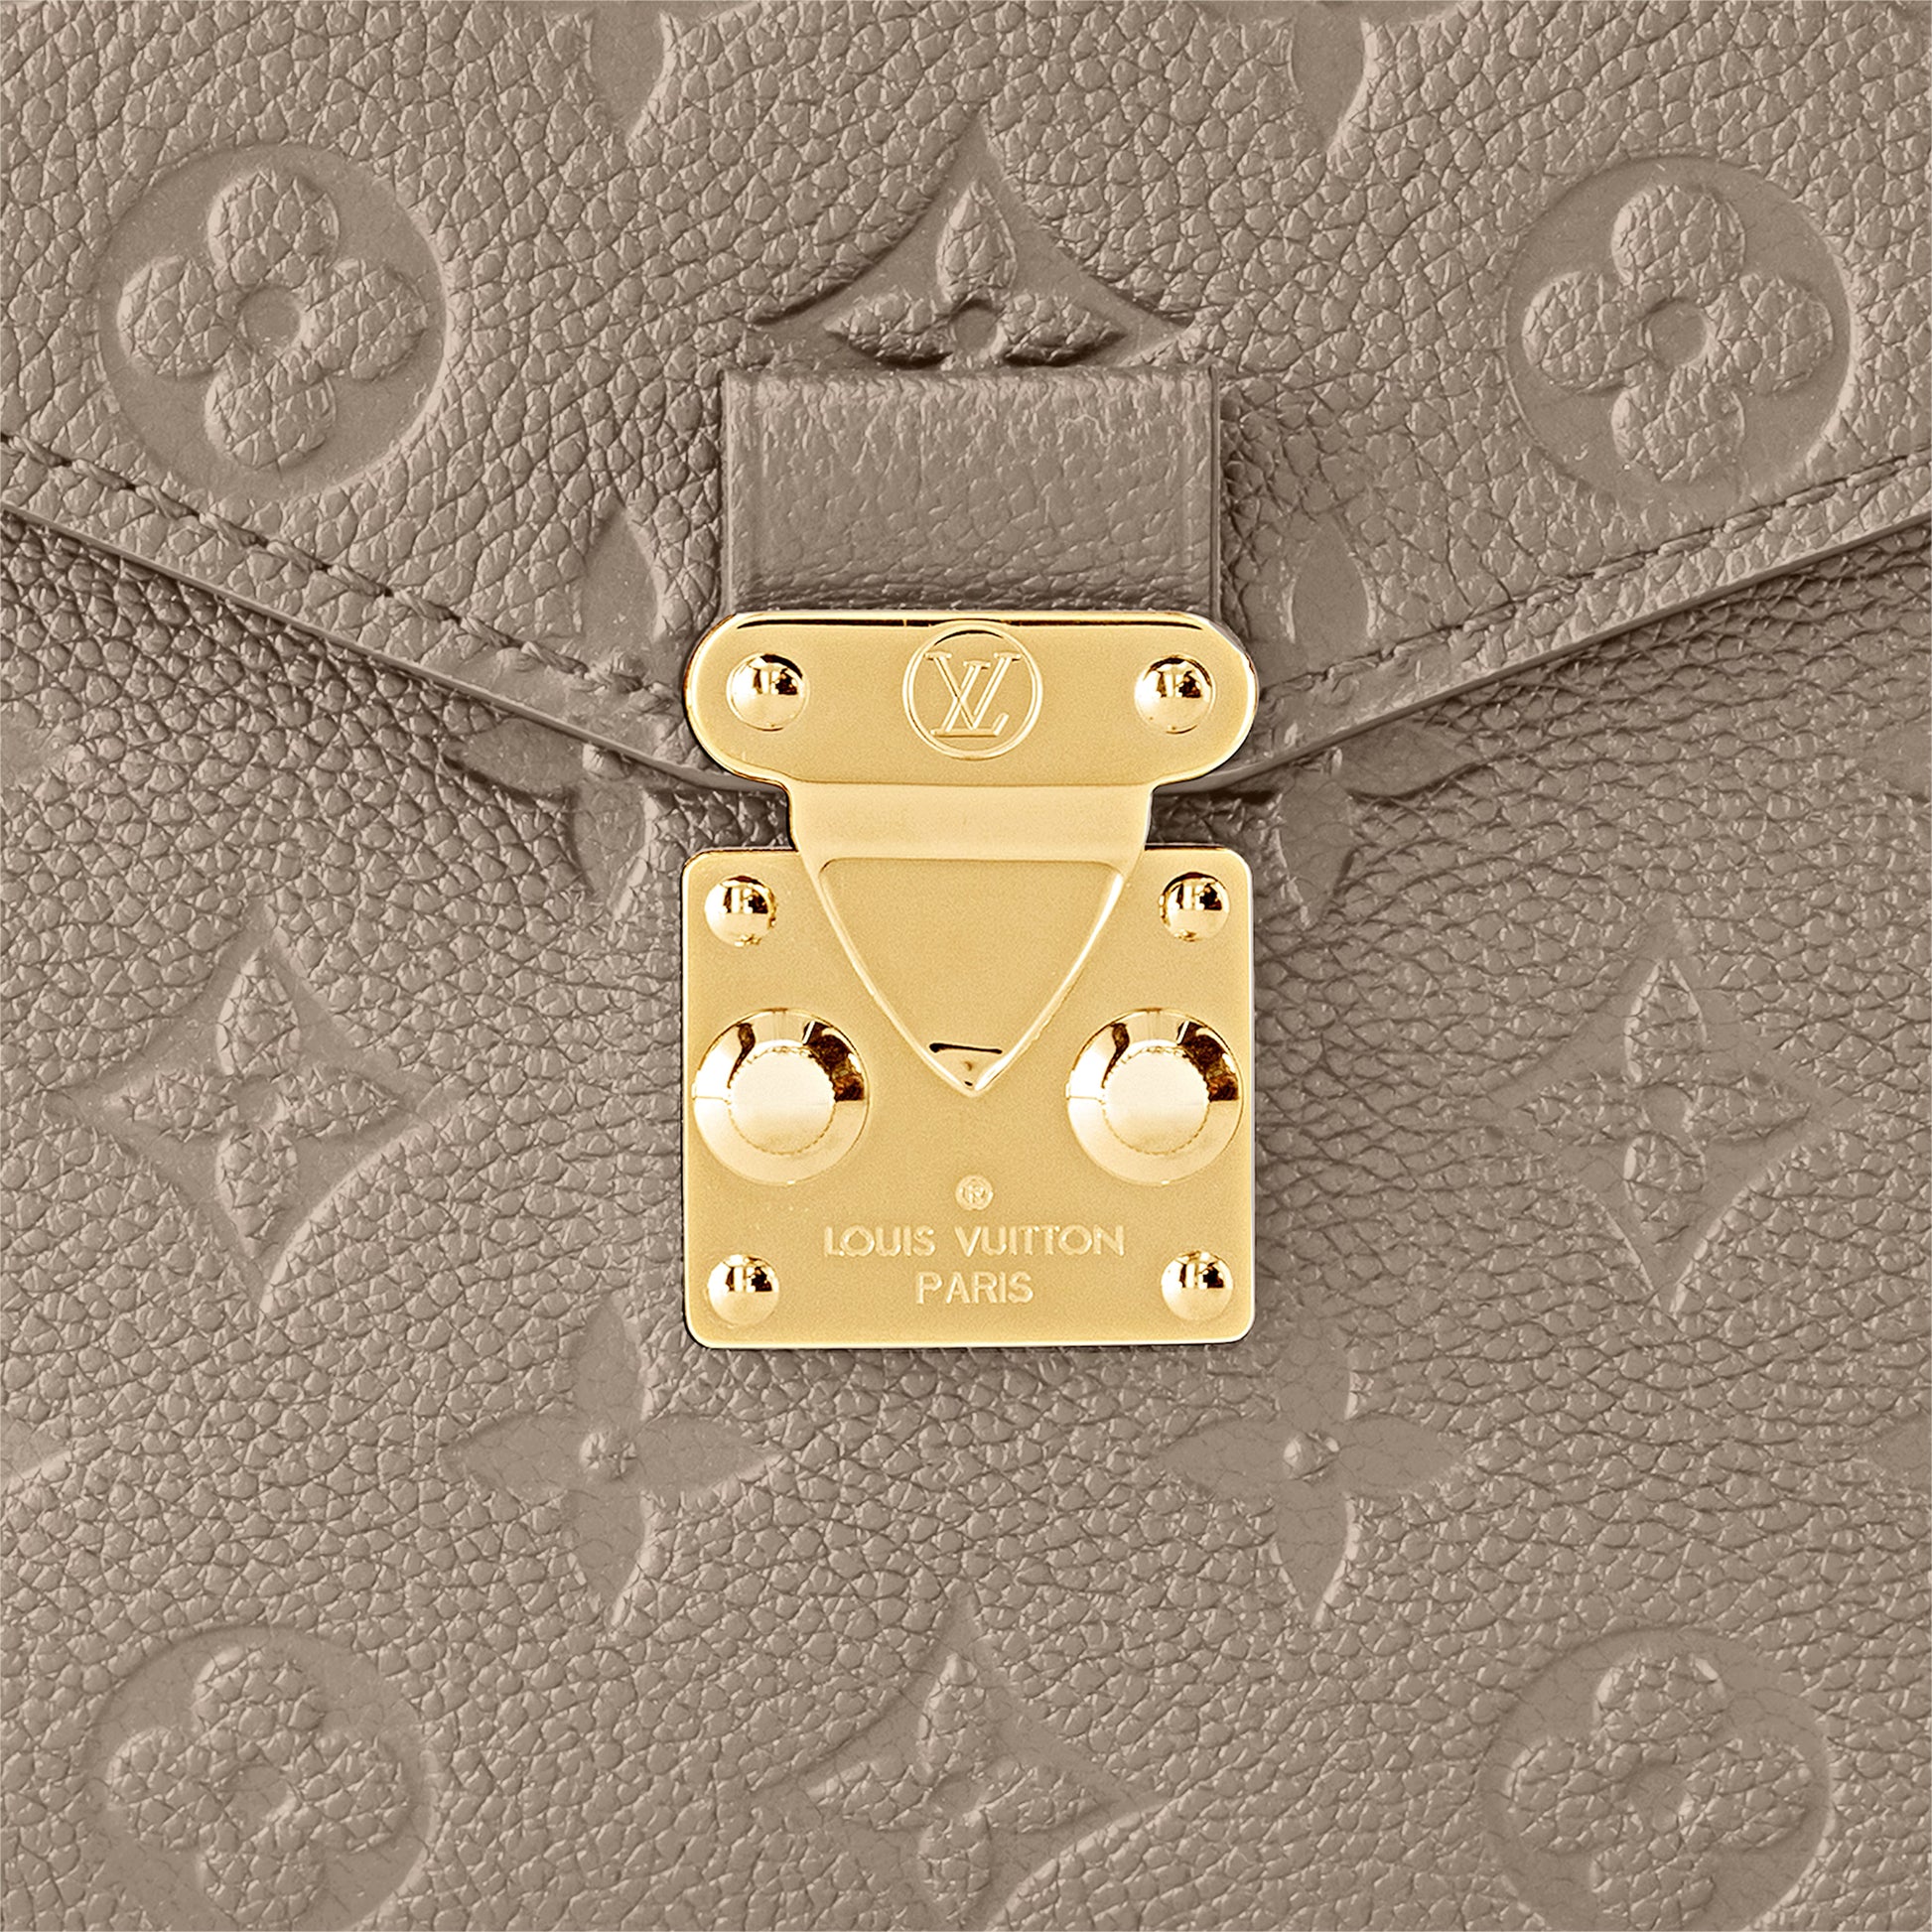 Louis Vuitton Empreinte Pochette Metis in Turtledove – The